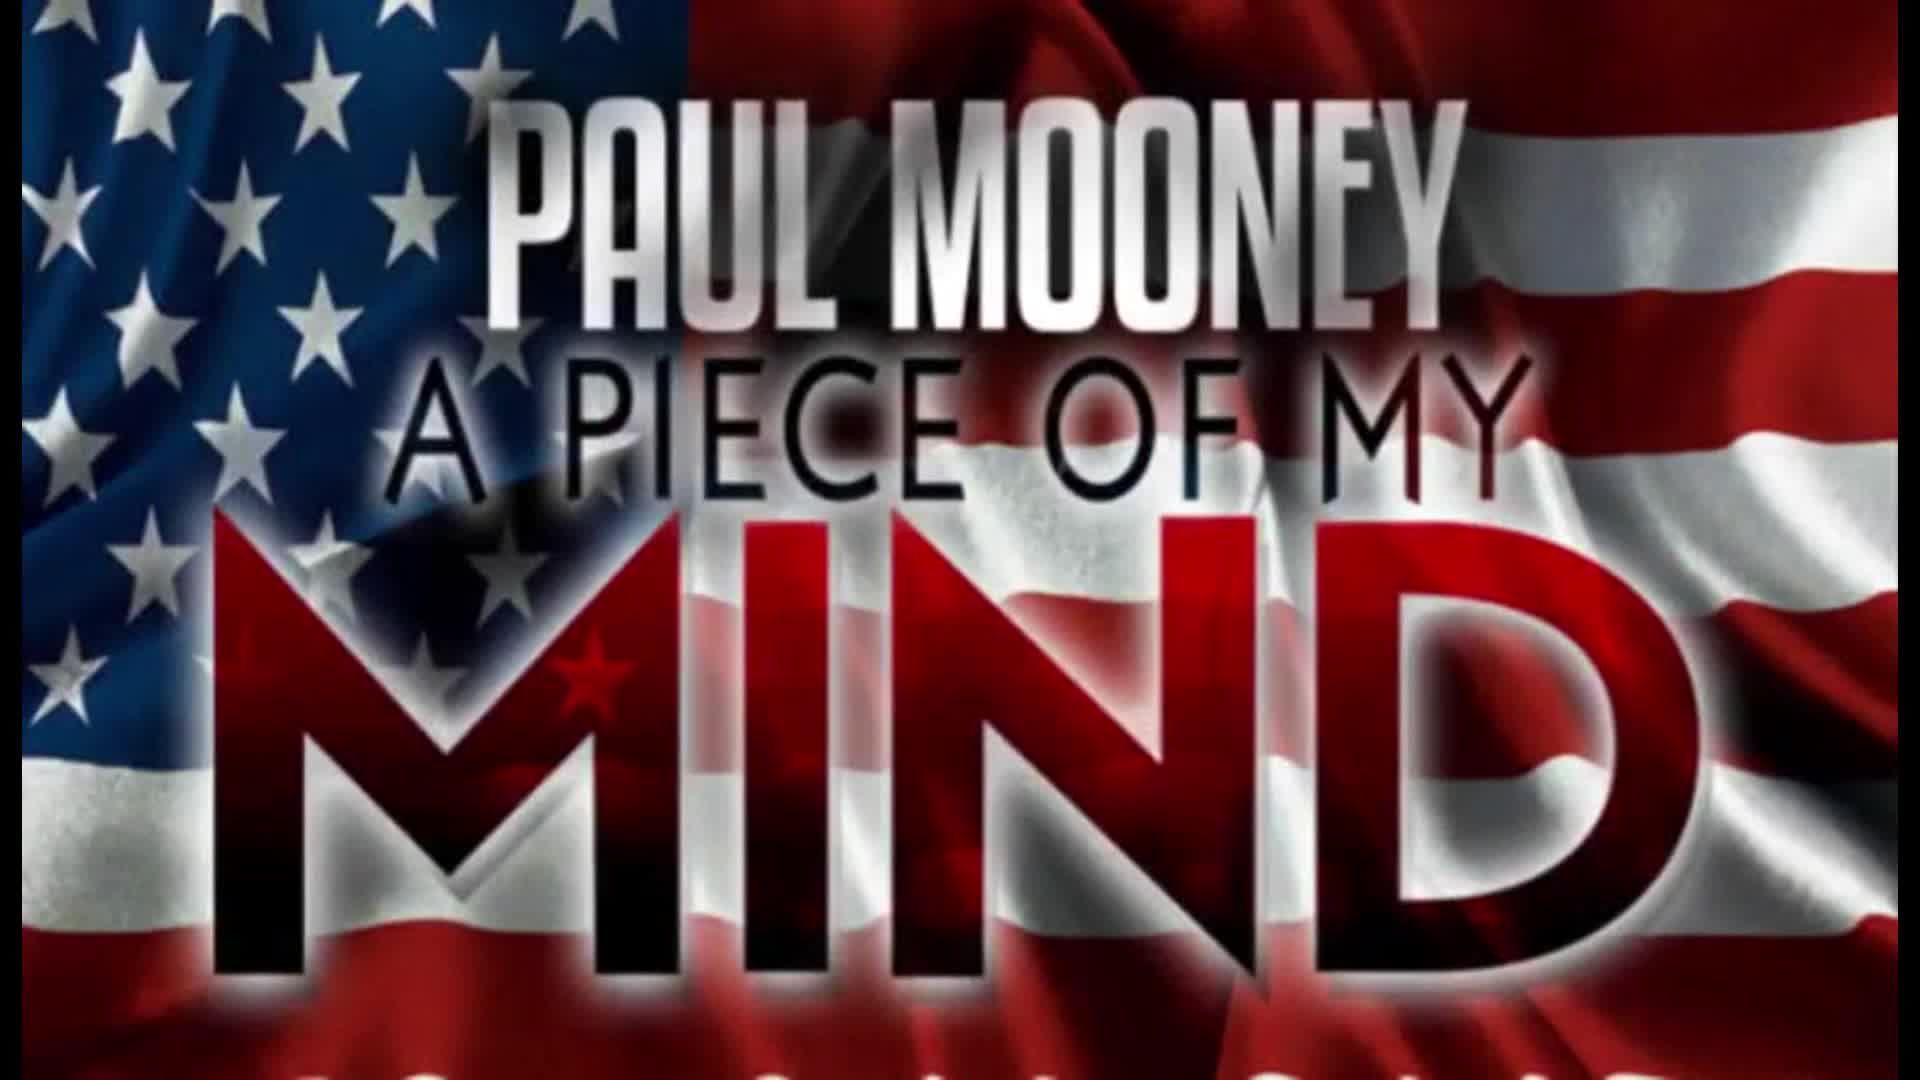 Paul Mooney A Piece Of My Mind